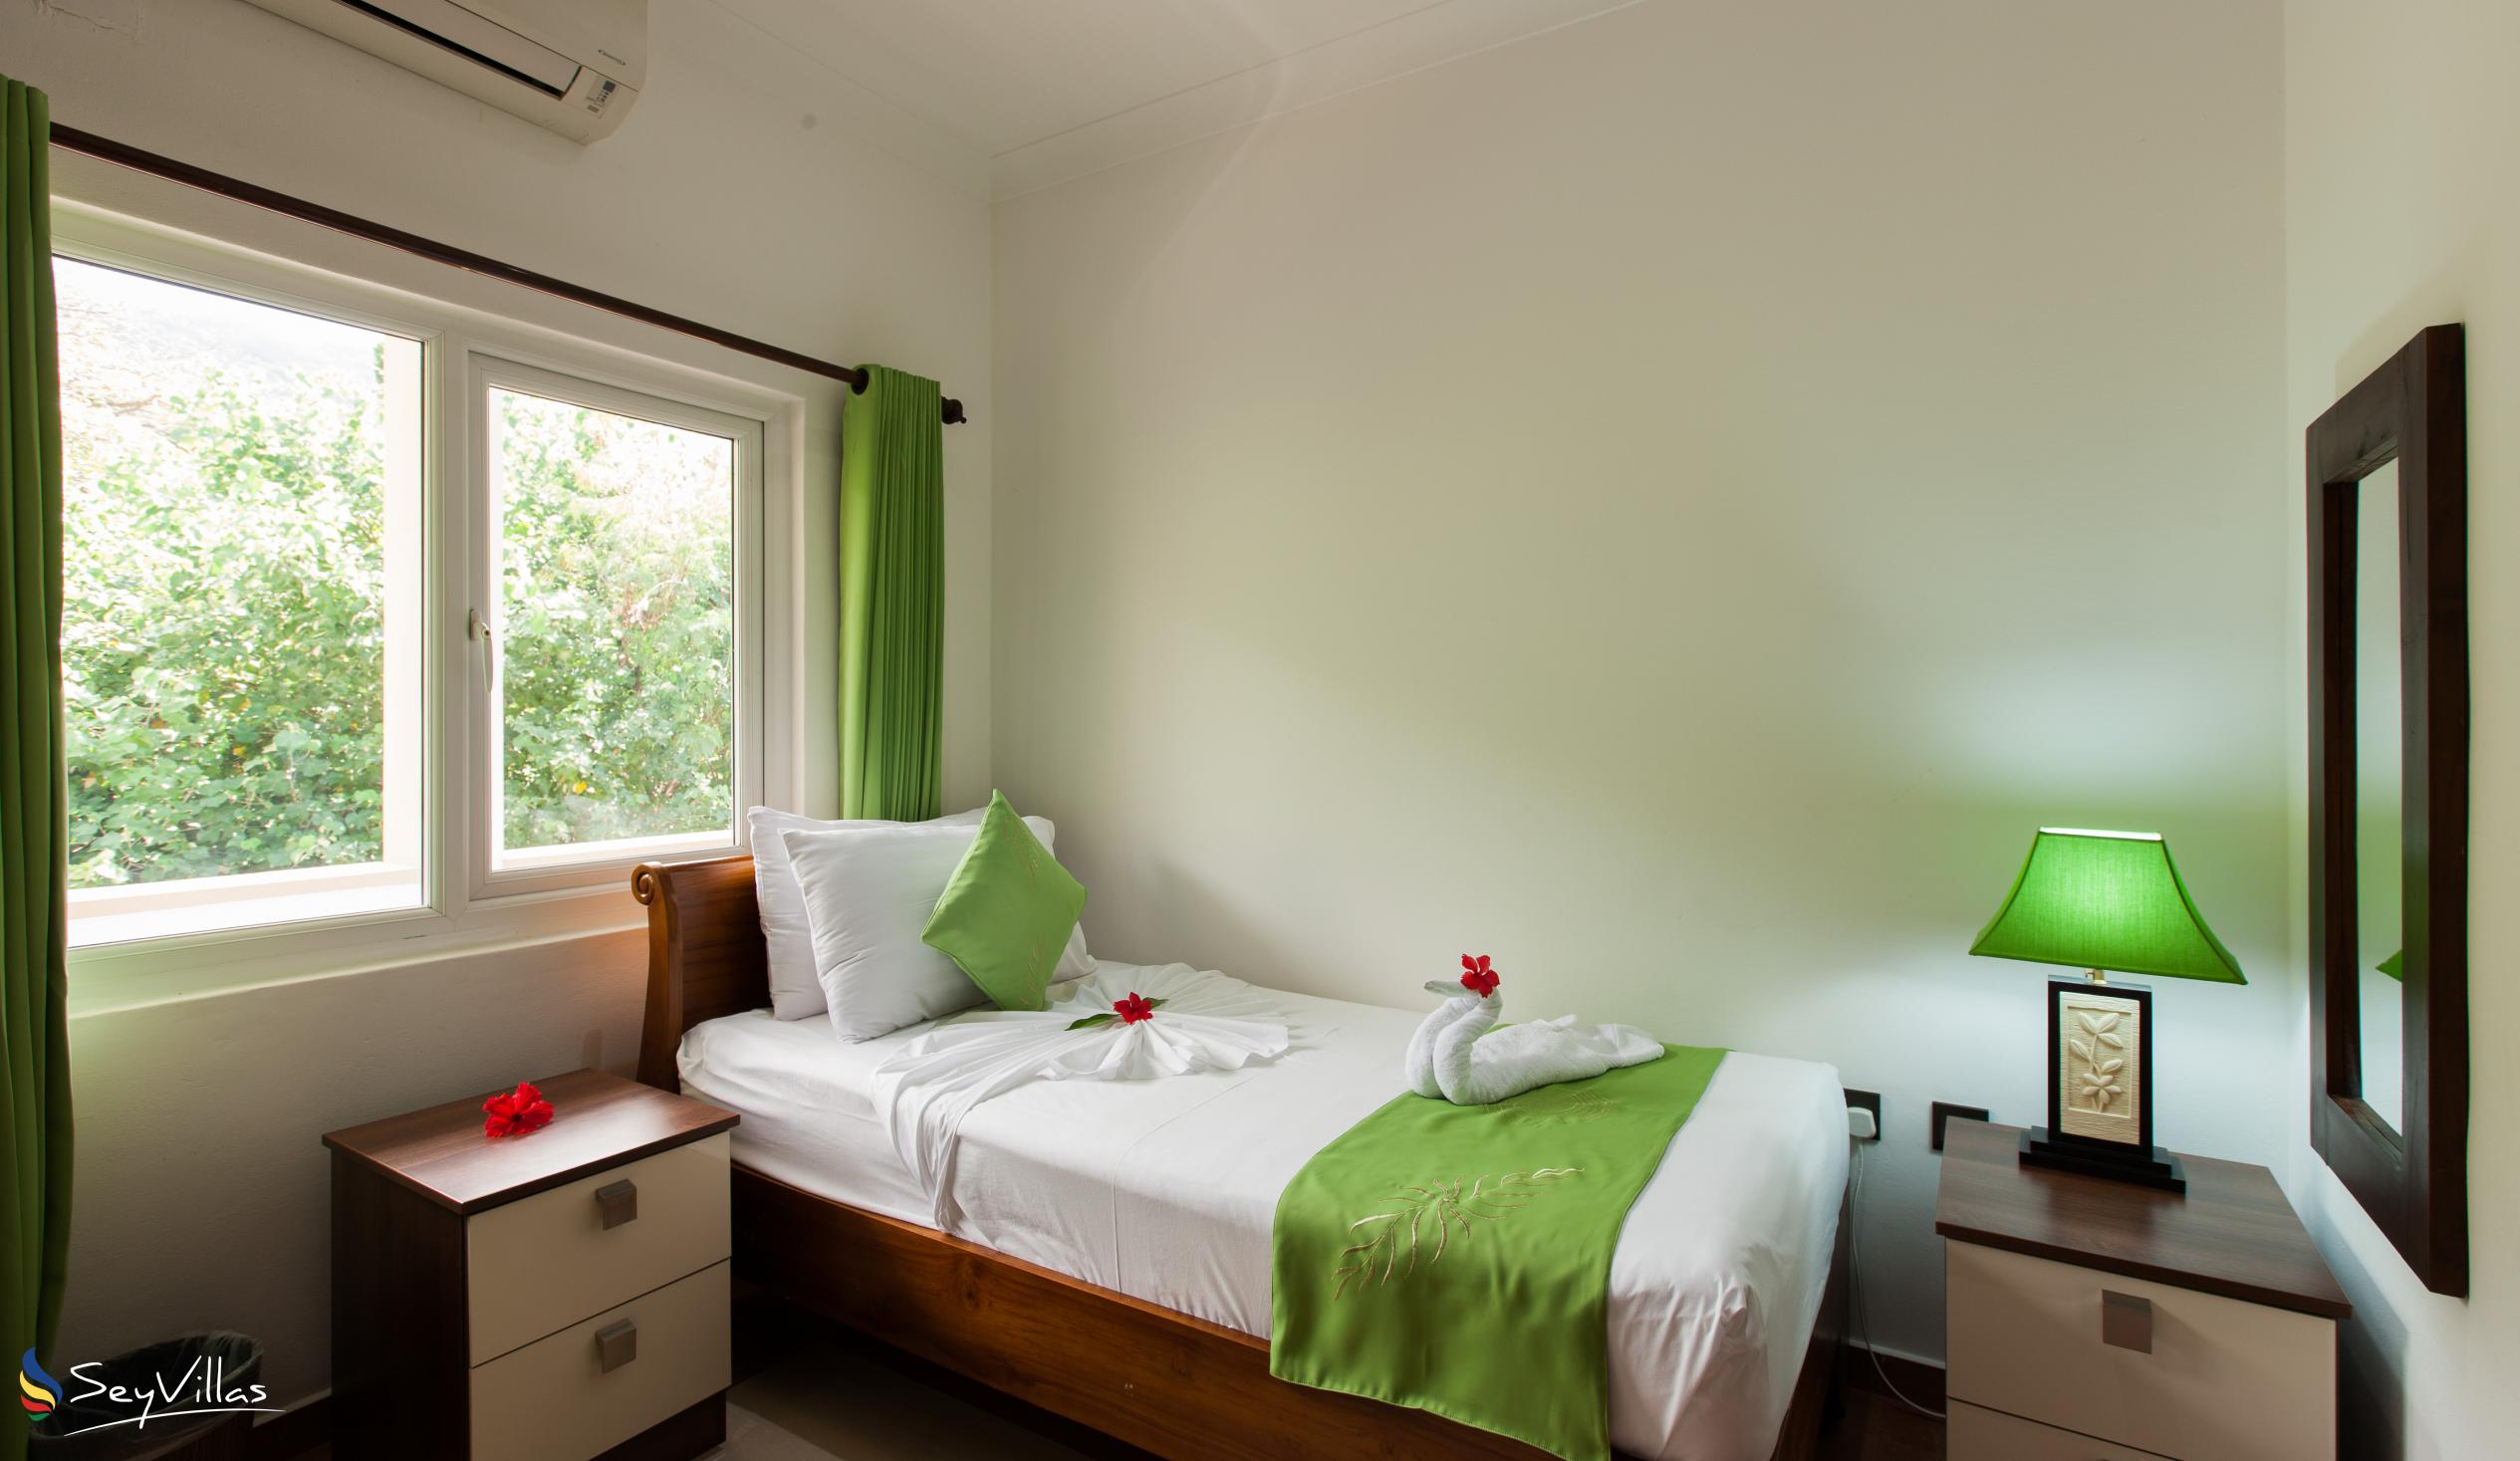 Photo 77: YASAD Luxury Beach Residence - 3-Bedroom Apartment - Praslin (Seychelles)